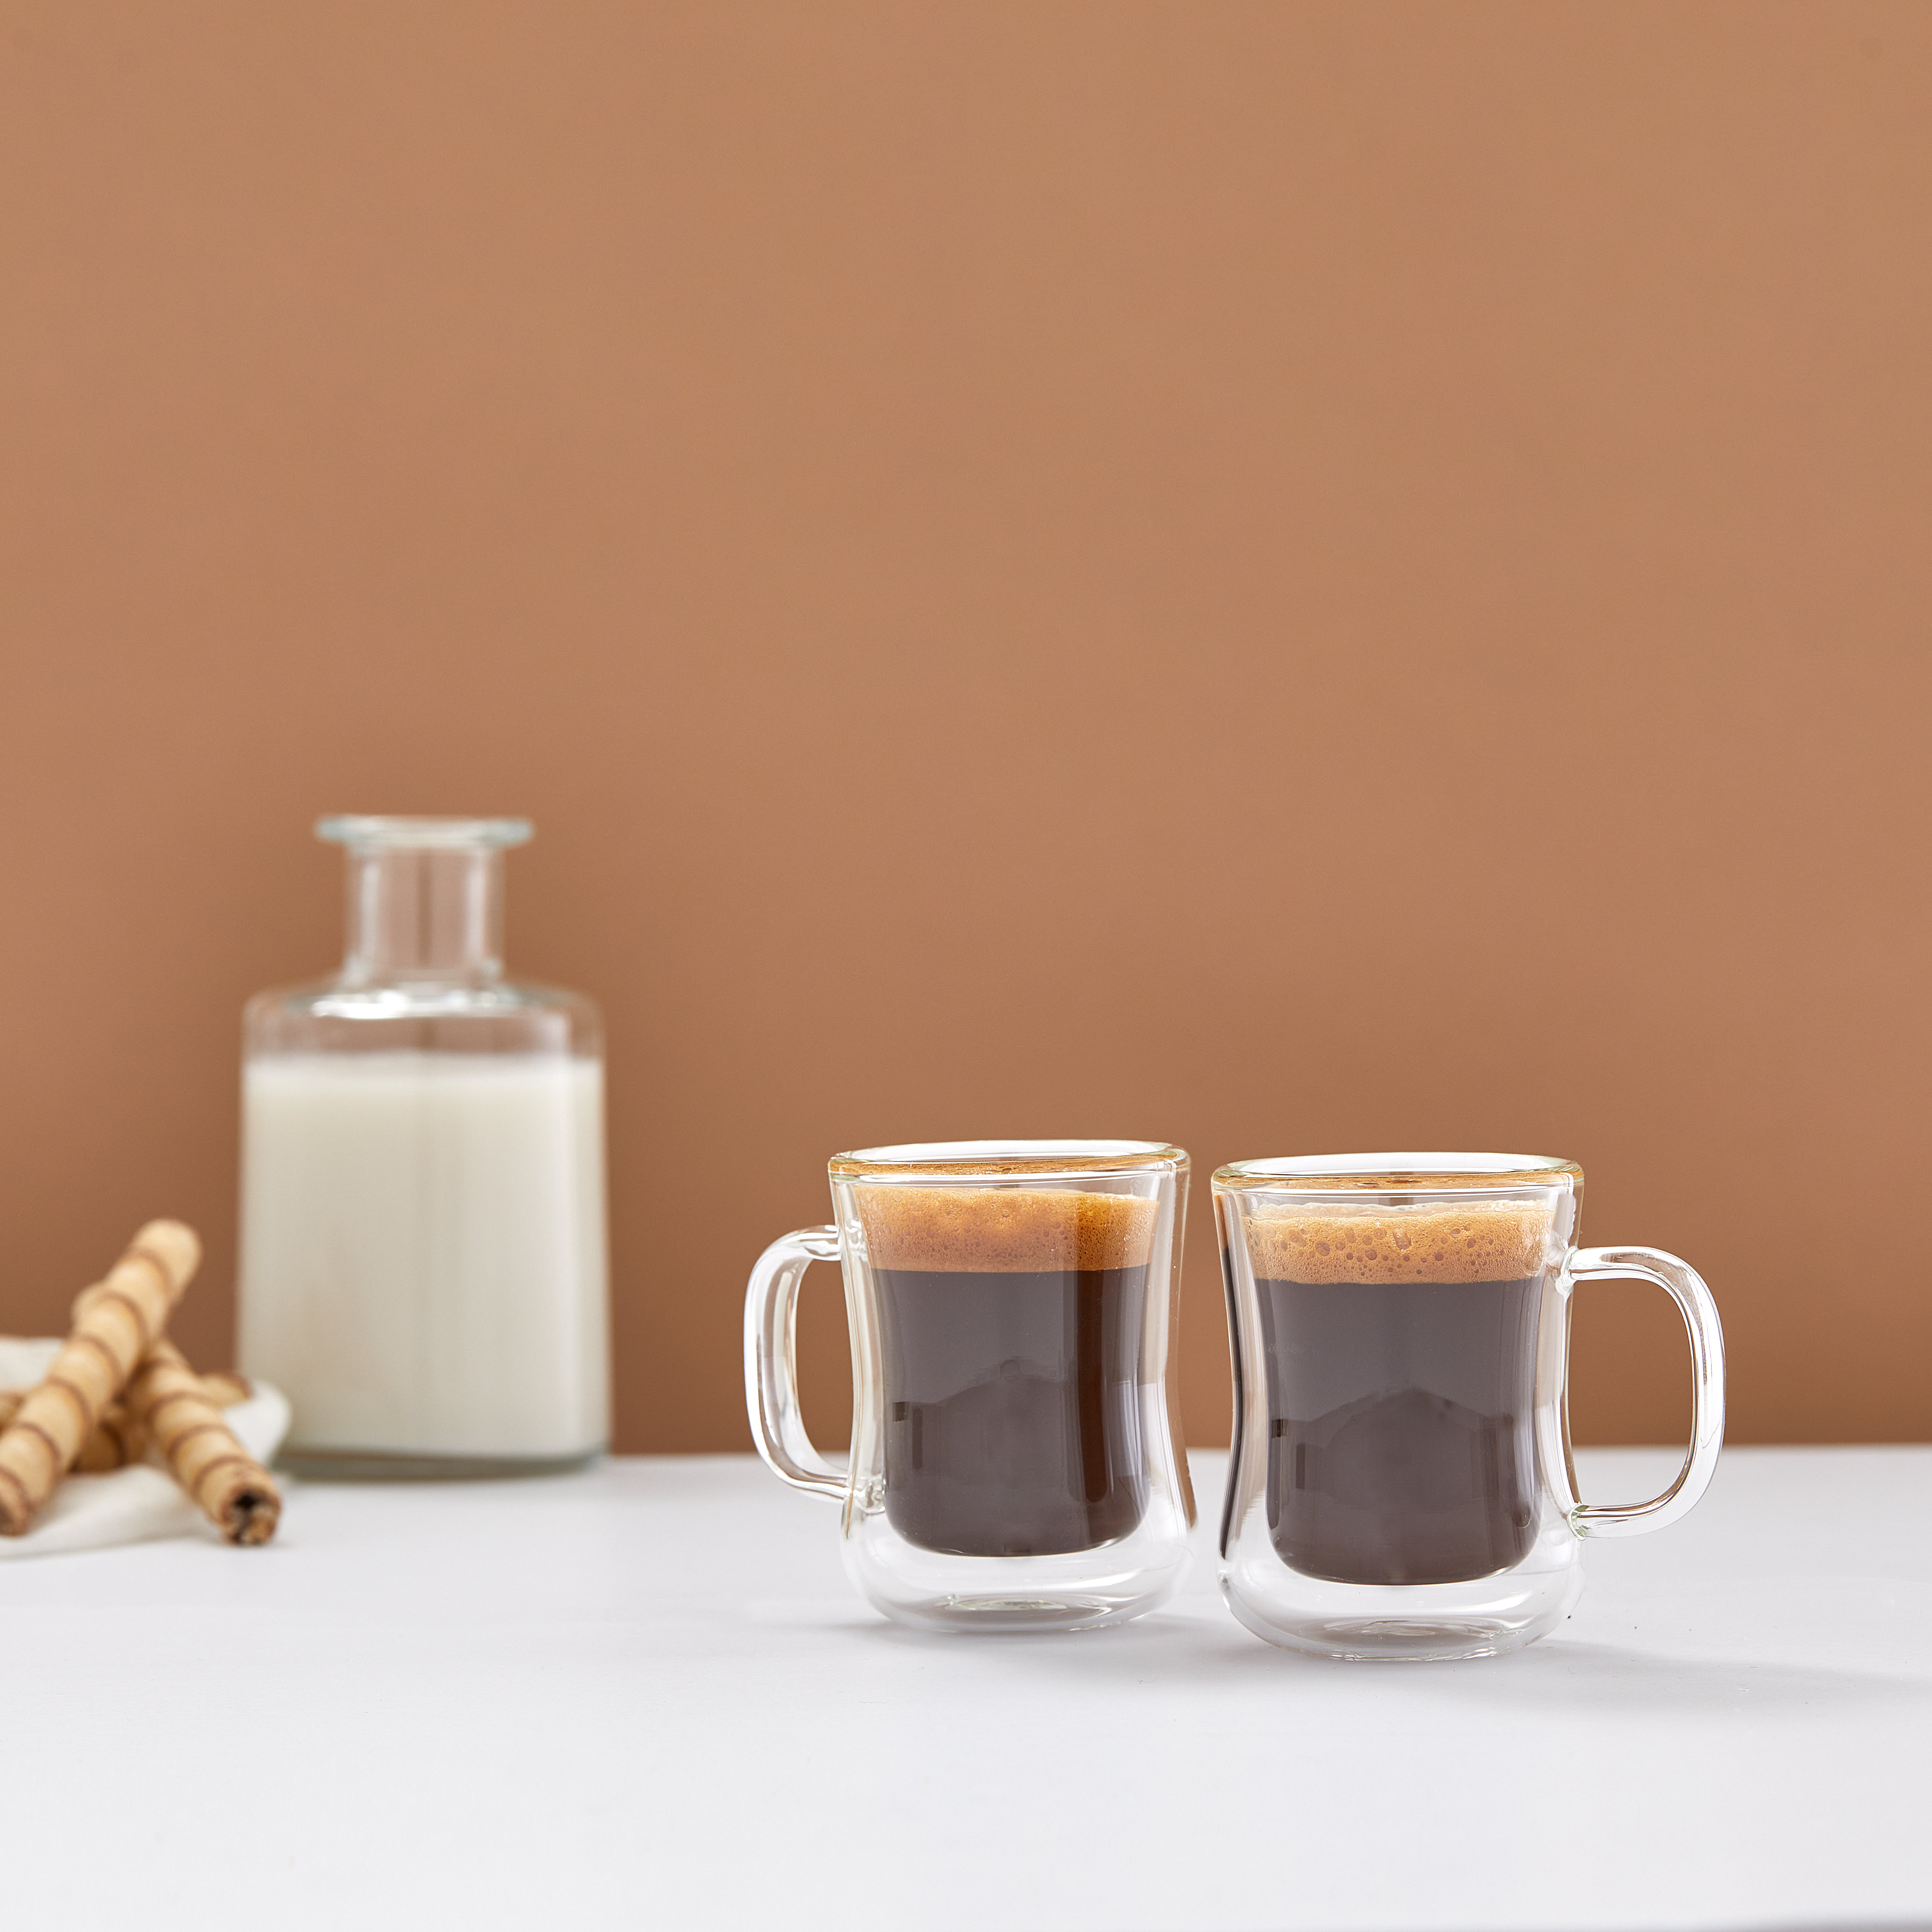 Two (2) JoyJolt Double Wall Insulated Glass Coffee Cups / Mugs